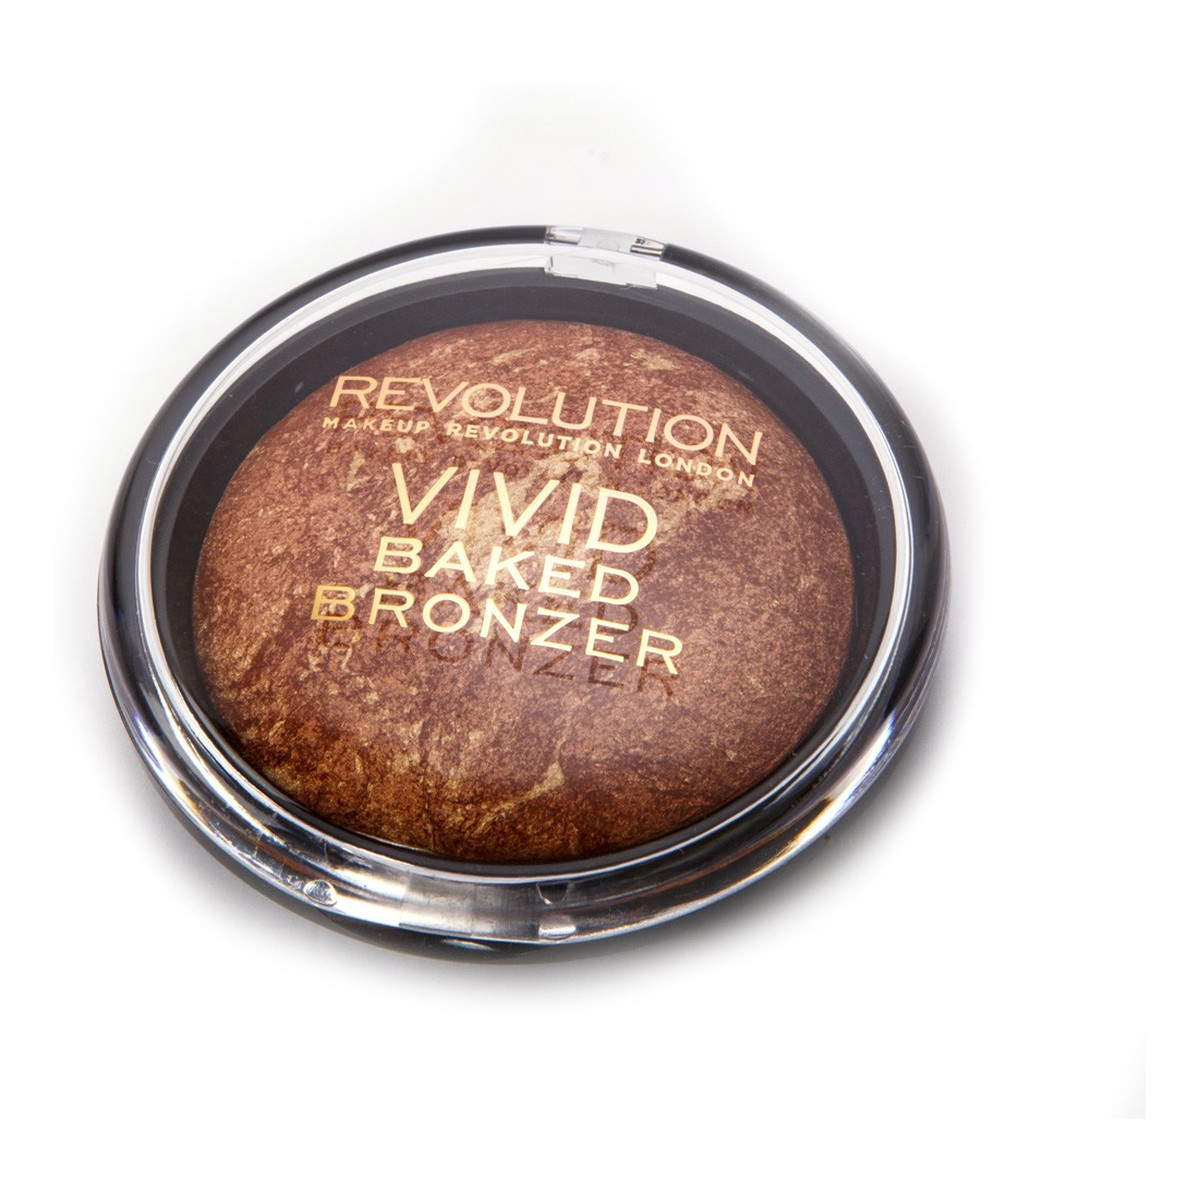 Makeup Revolution Vivid Baked Bronze Wypiekany Puder Brązujący Rock On World (03) 13g